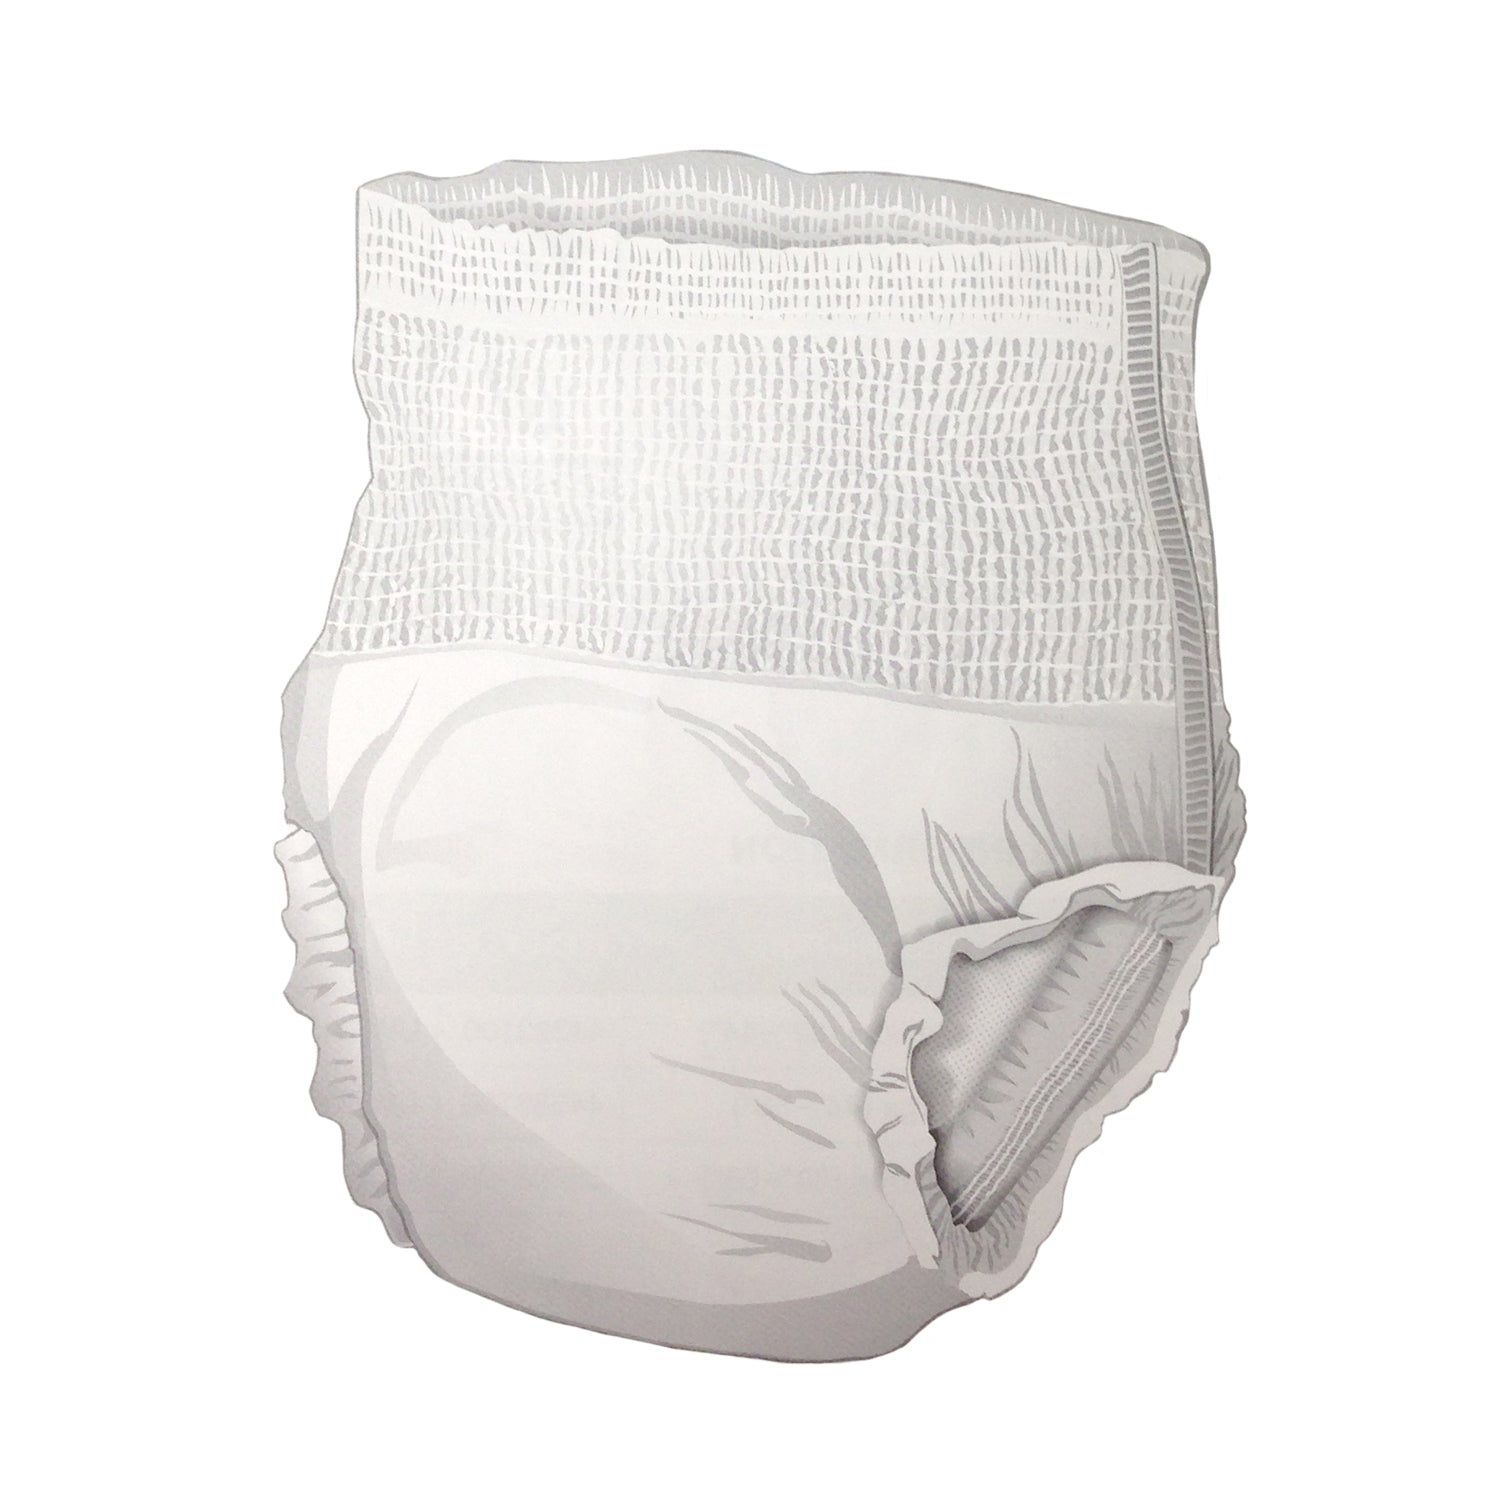 Always Discreet Pants Triple layer Incontinence Underwear Medium Pack of 12